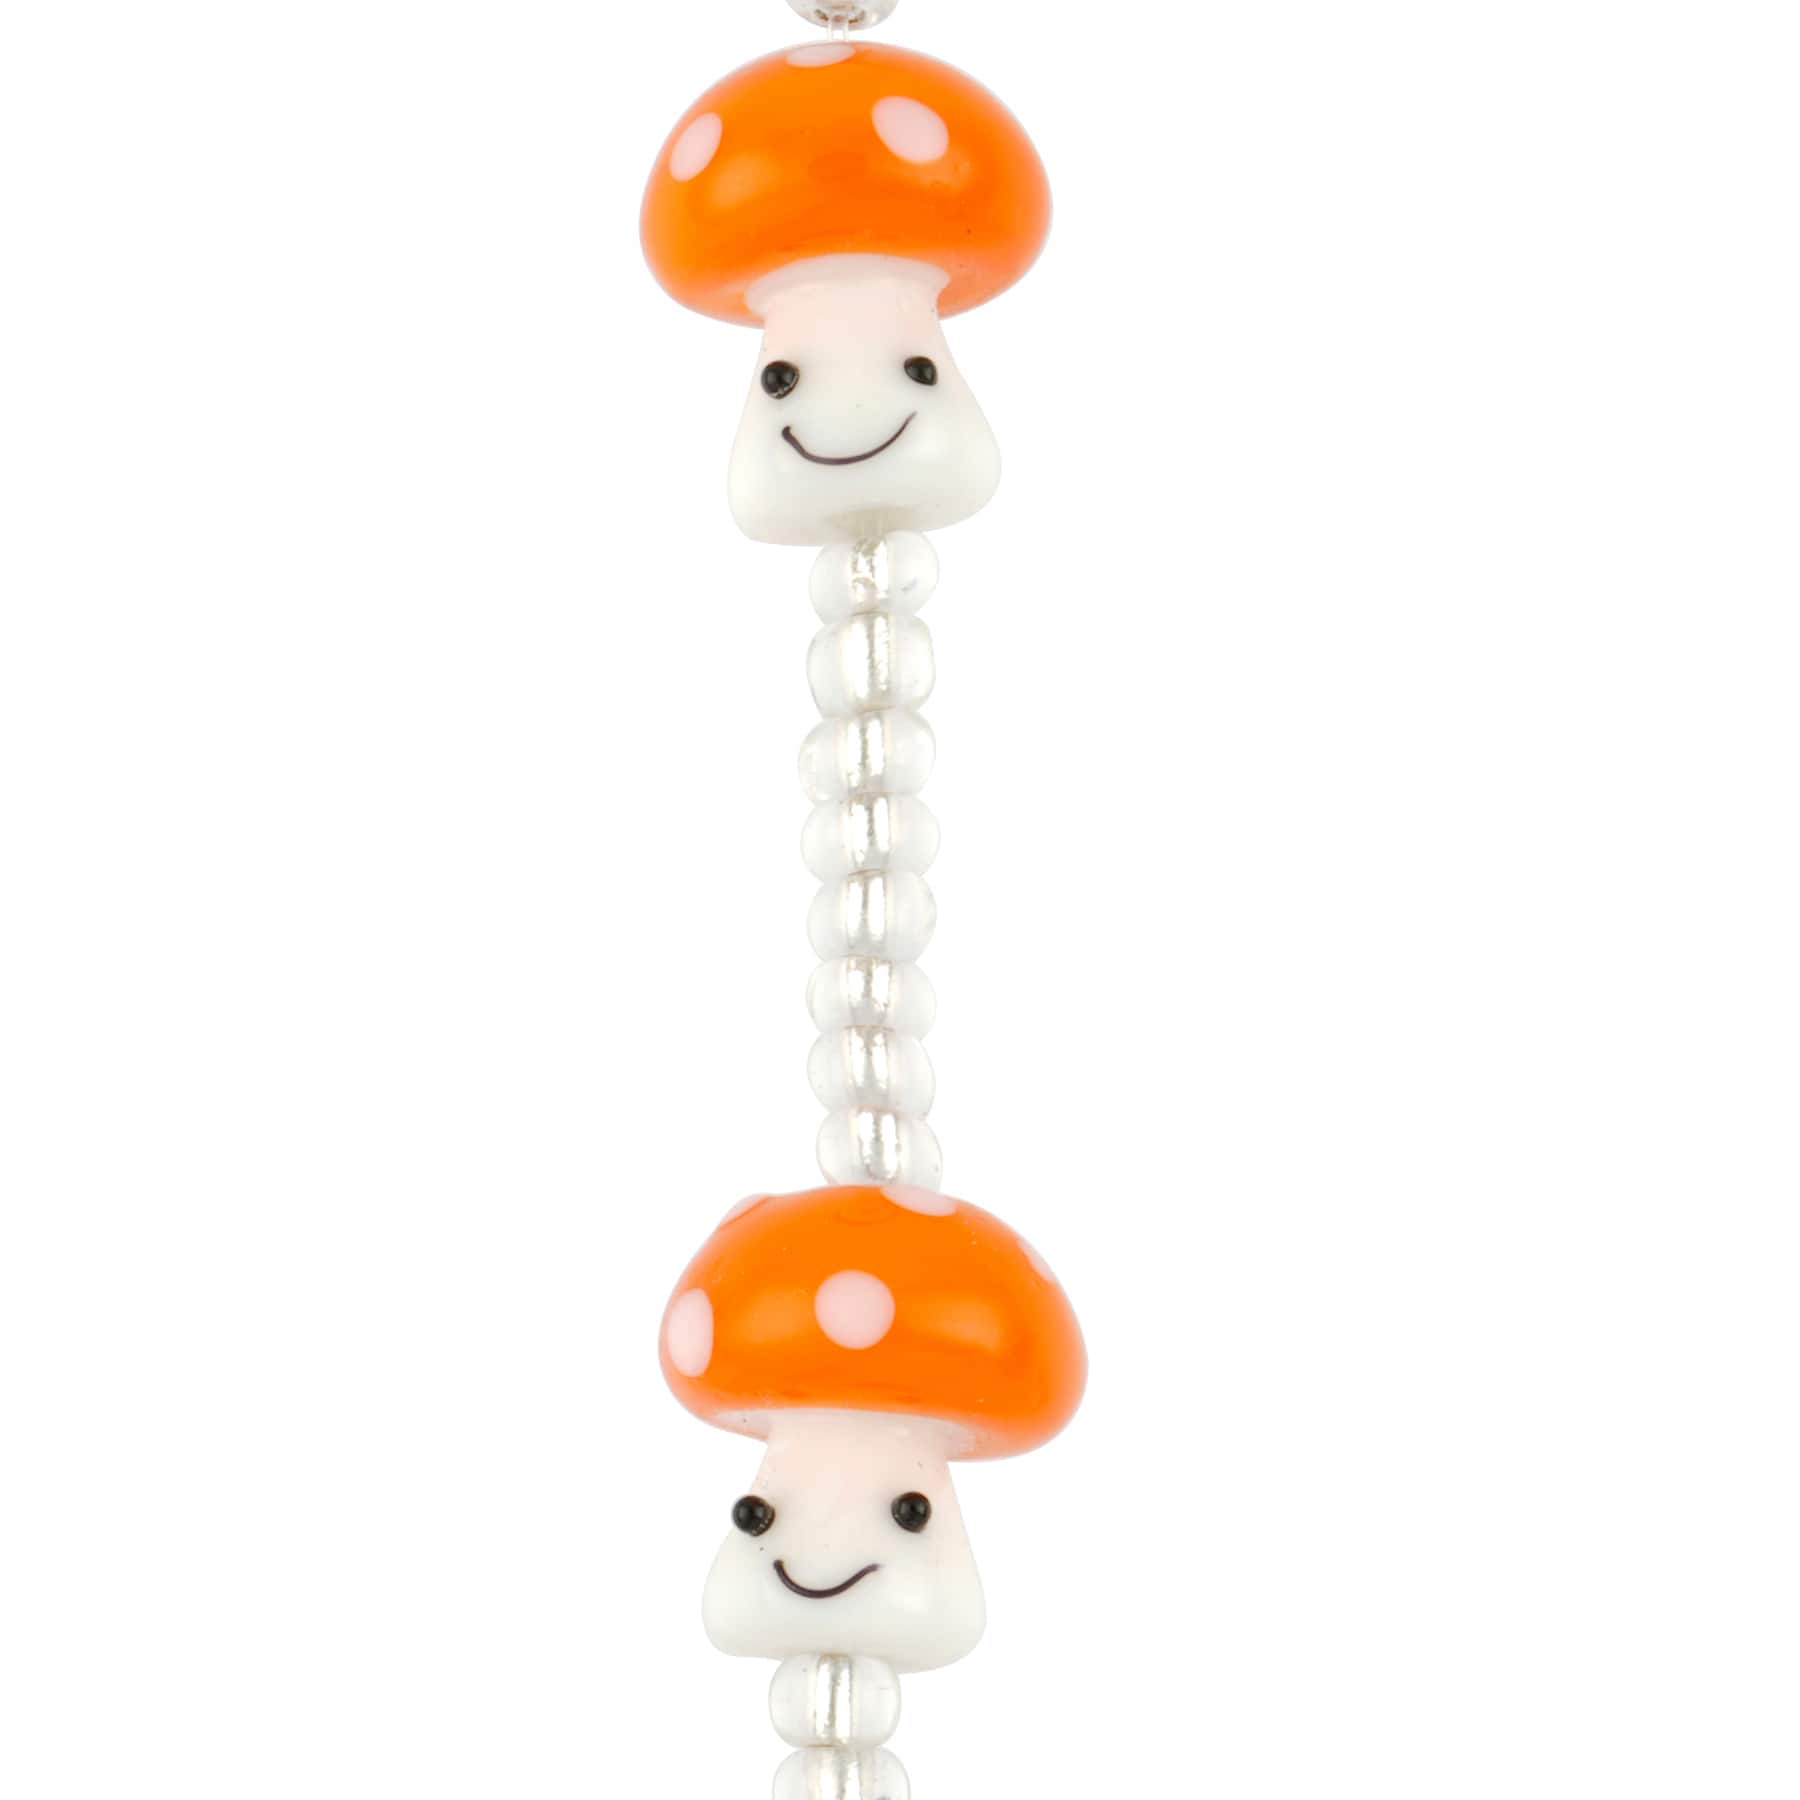 Orange Lampwork Glass Mushroom Beads by Bead Landing™